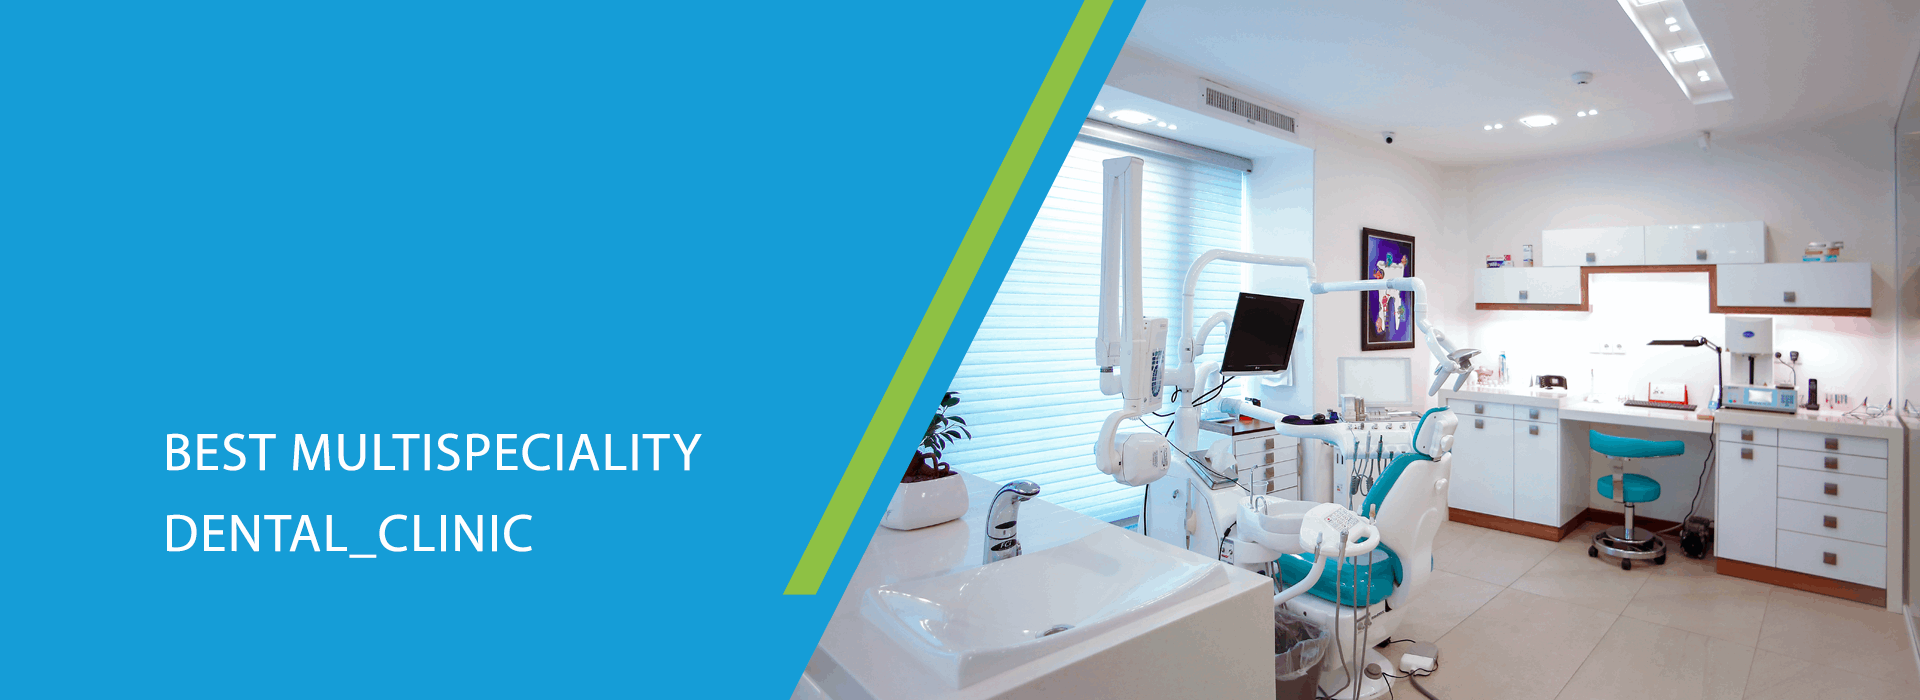 Best Multispecialty dental clinic in Noida - dental treatment in Noida